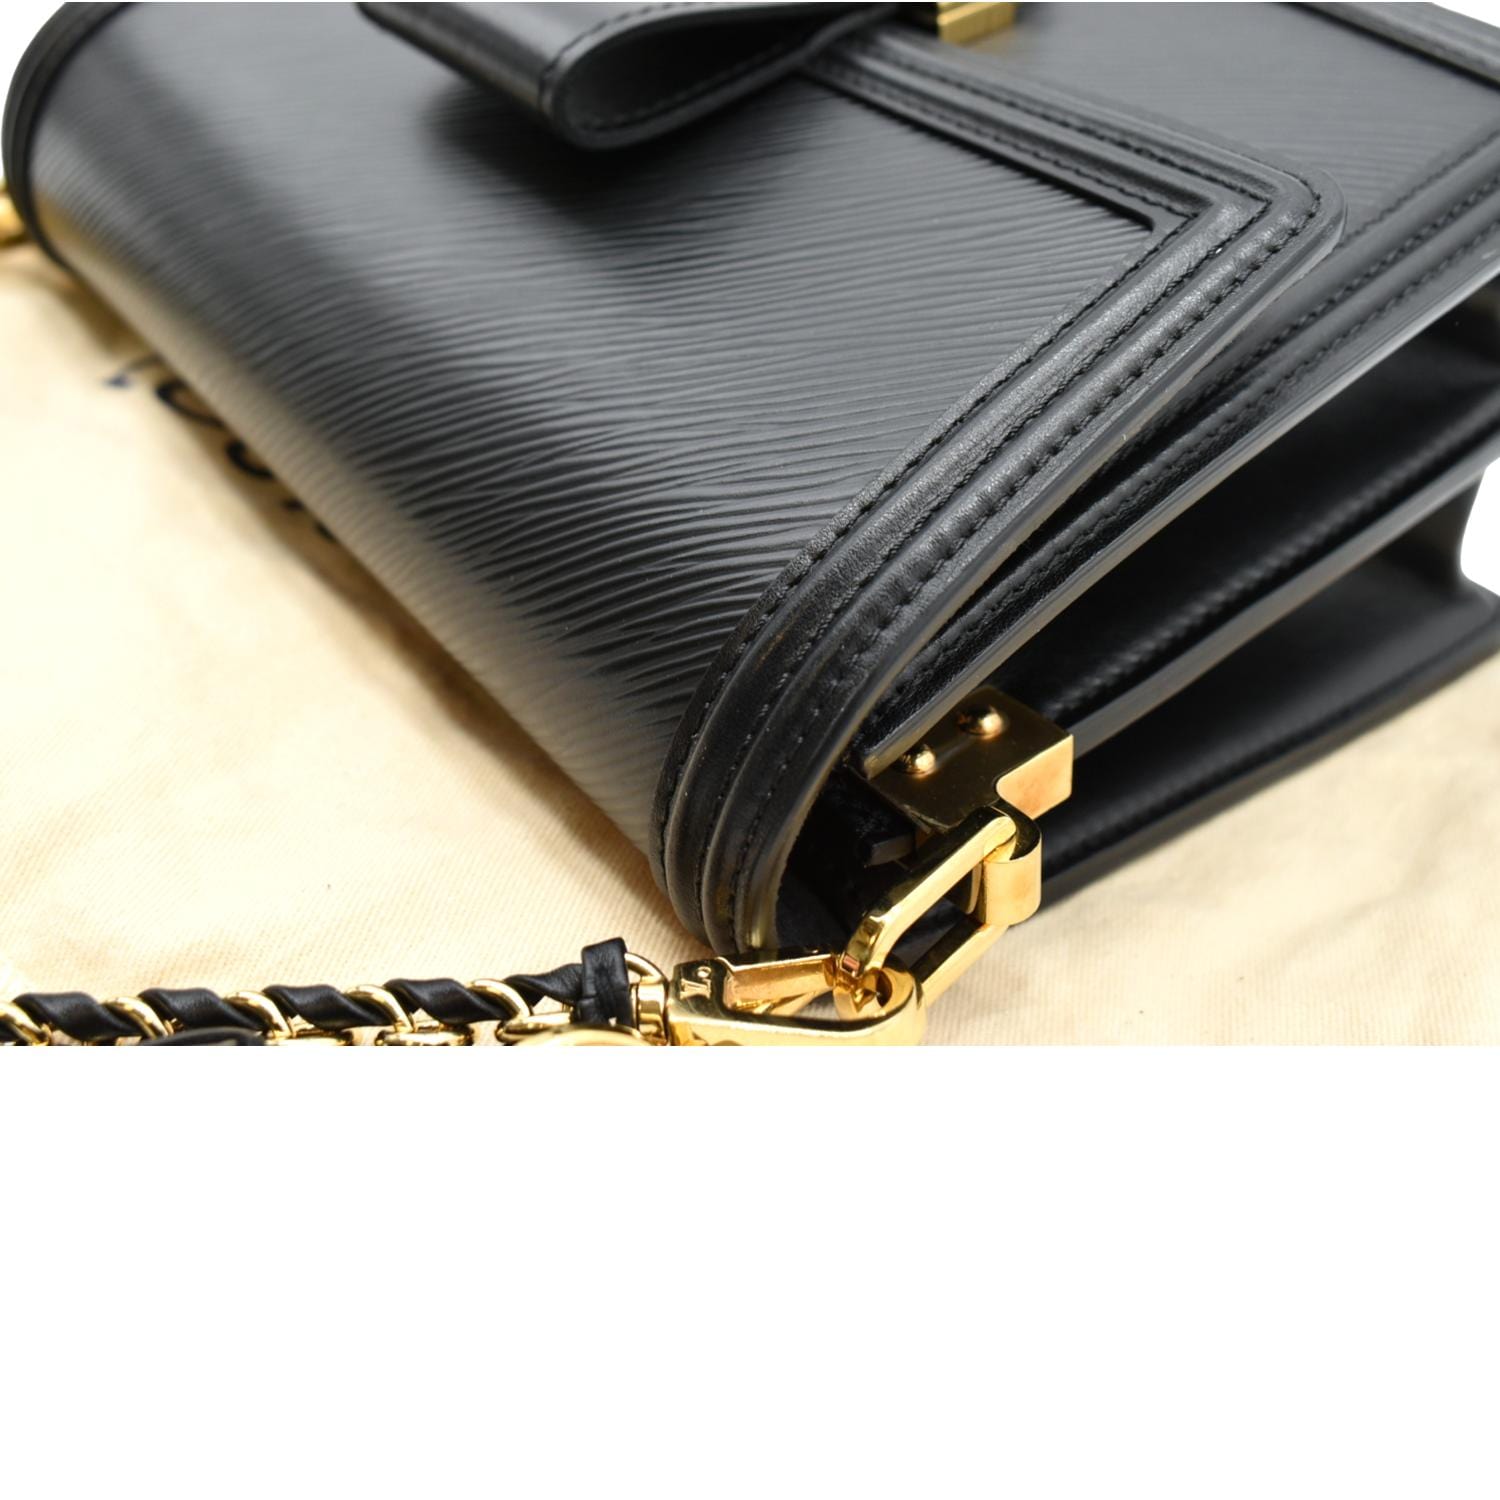 Dauphine MM Epi Leather - Women - Handbags